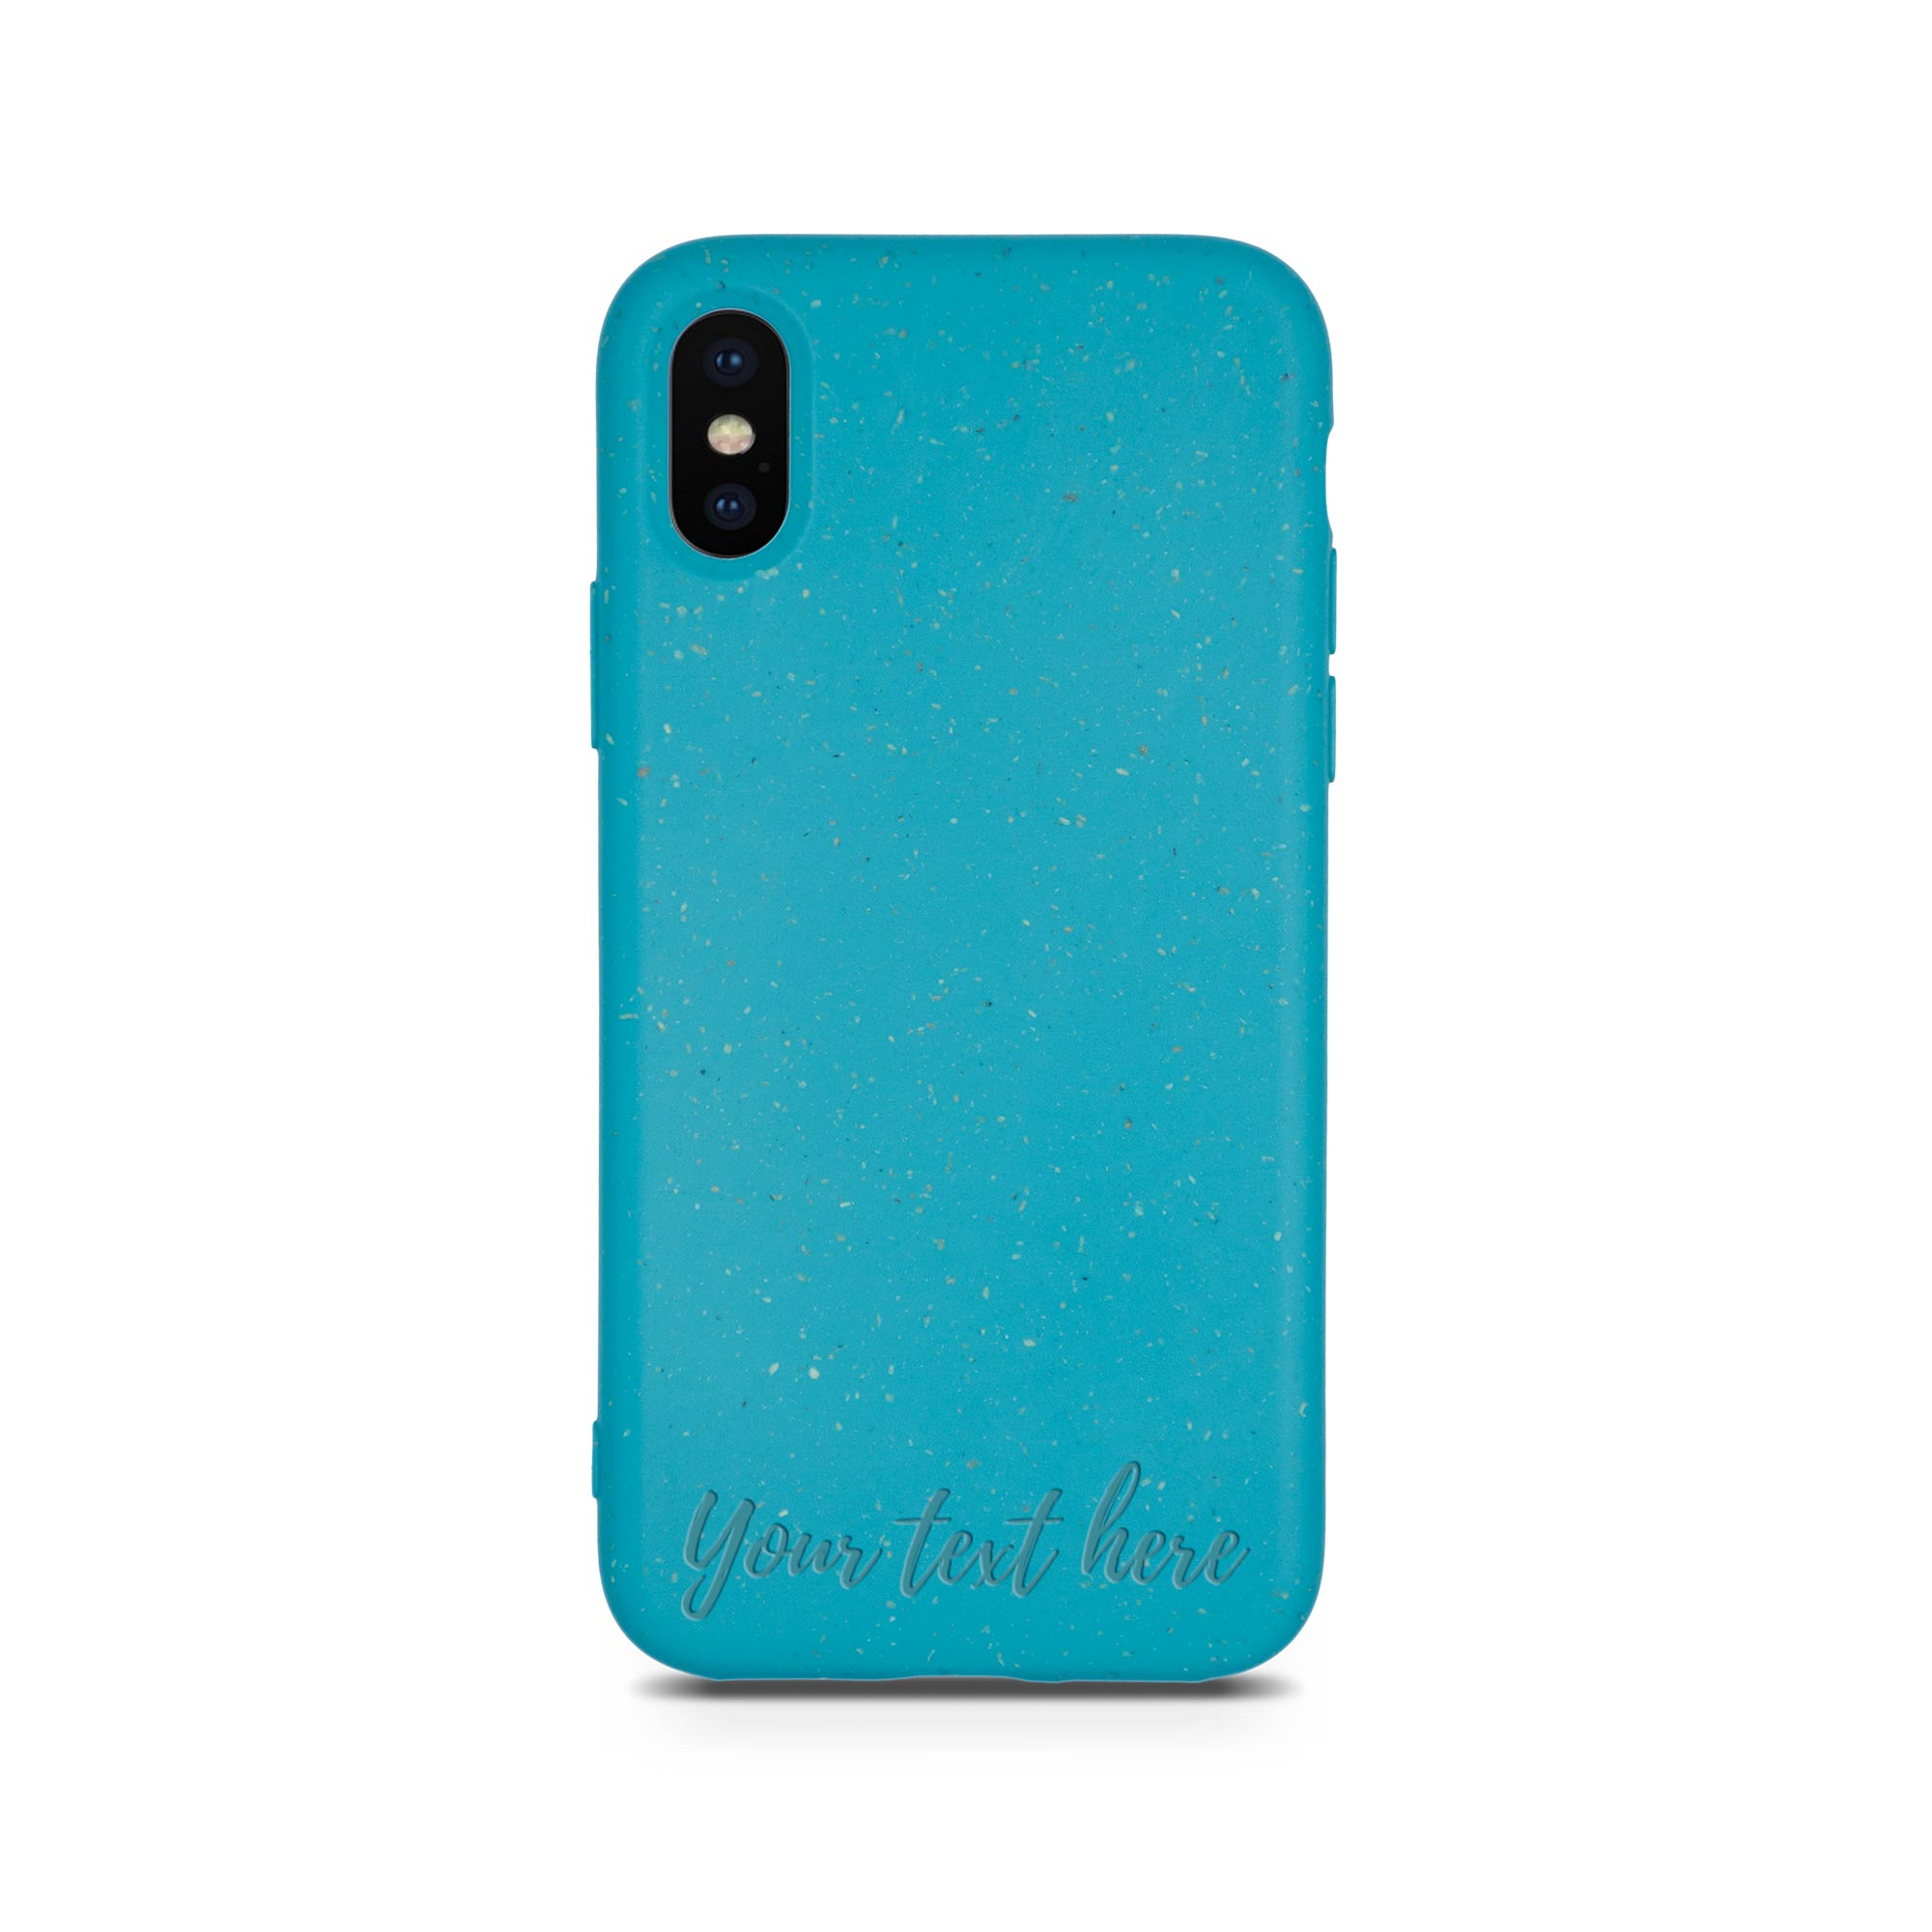 Funda para teléfono con texto horizontal personalizada azul océano para iPhone X